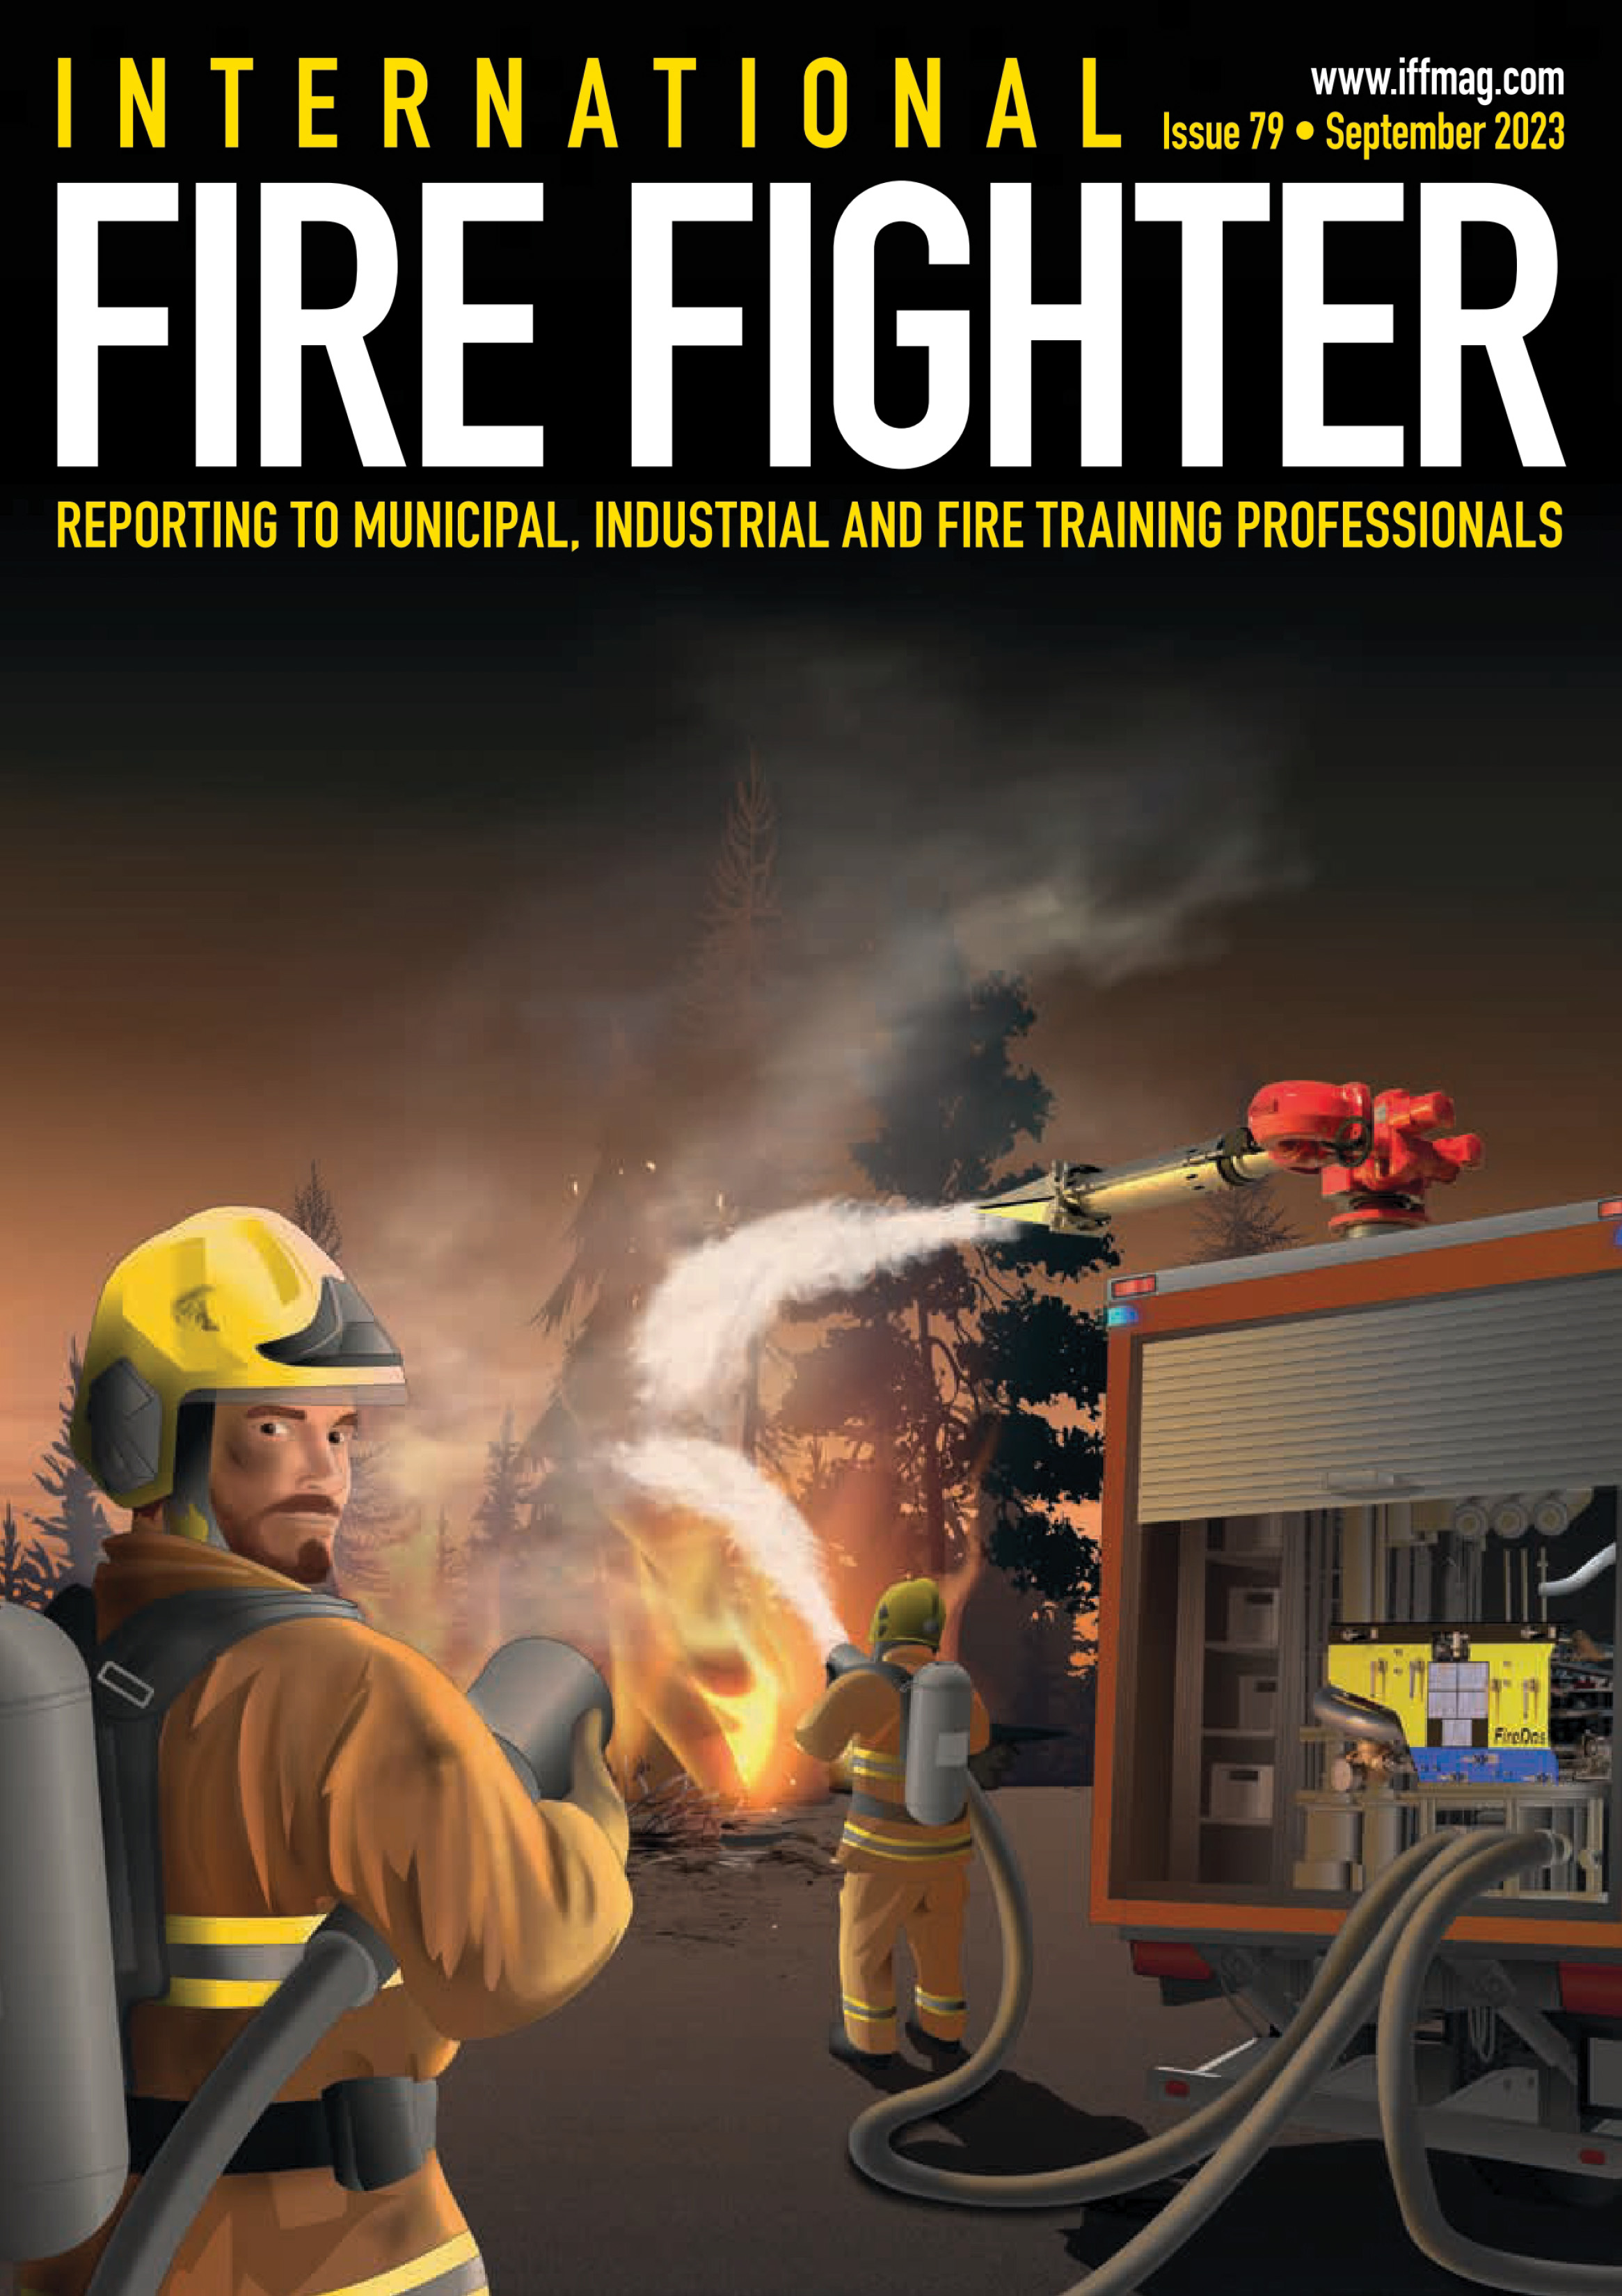 International Fire Fighter Magazine Issue 79